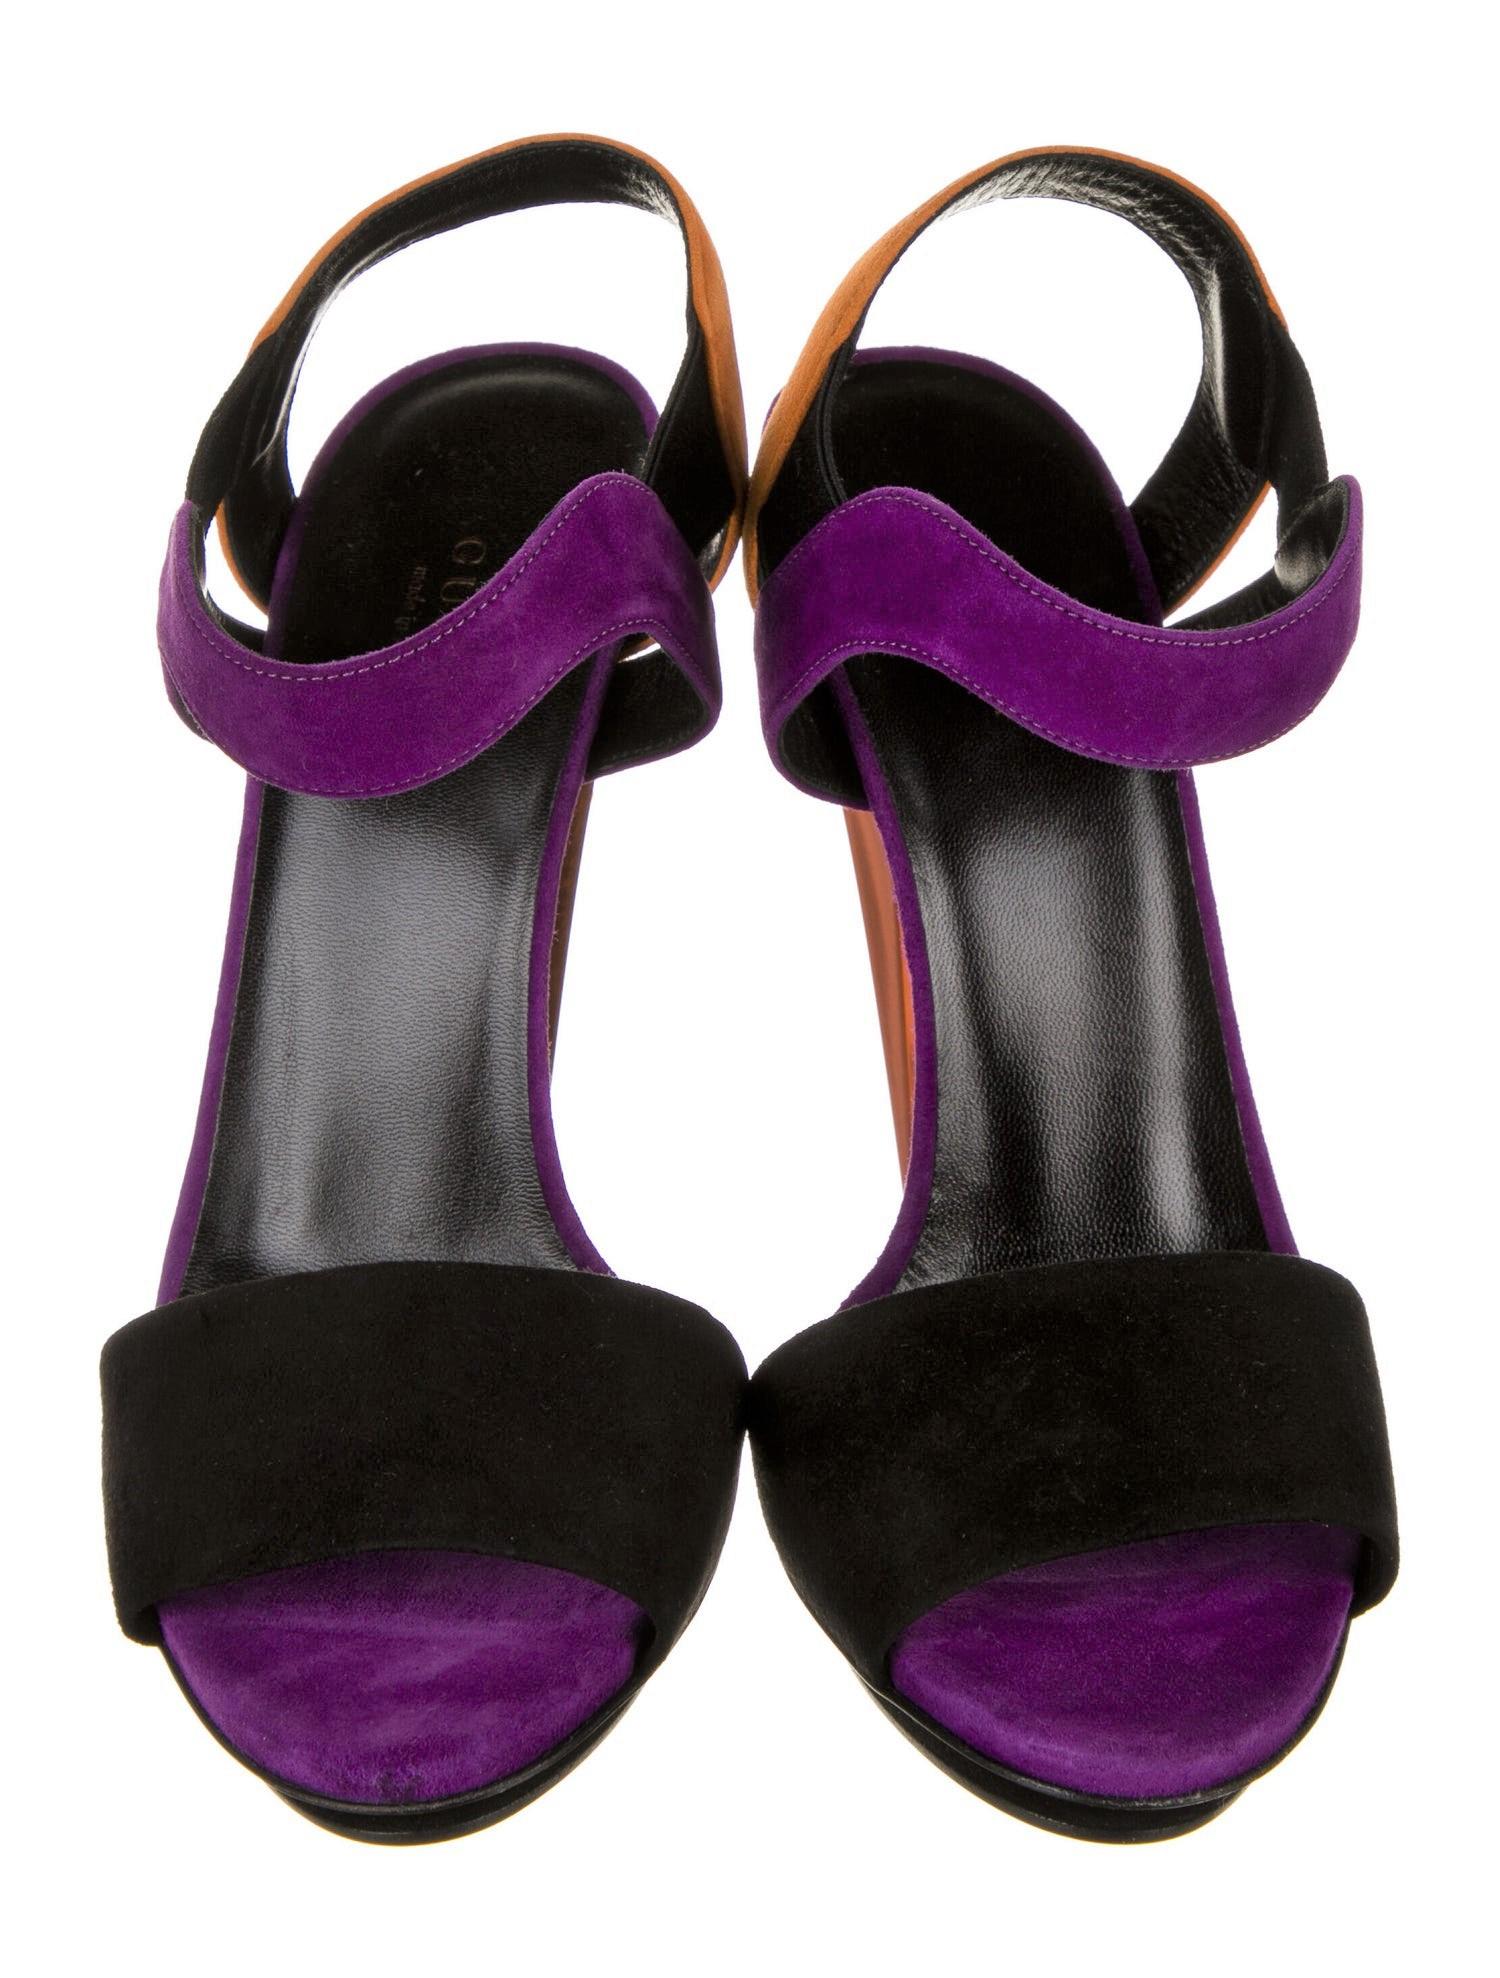 New Gucci Ad Runway 2014 Purple Orange Suede Mirrored Pump Heels Sz 38.5 For Sale 3